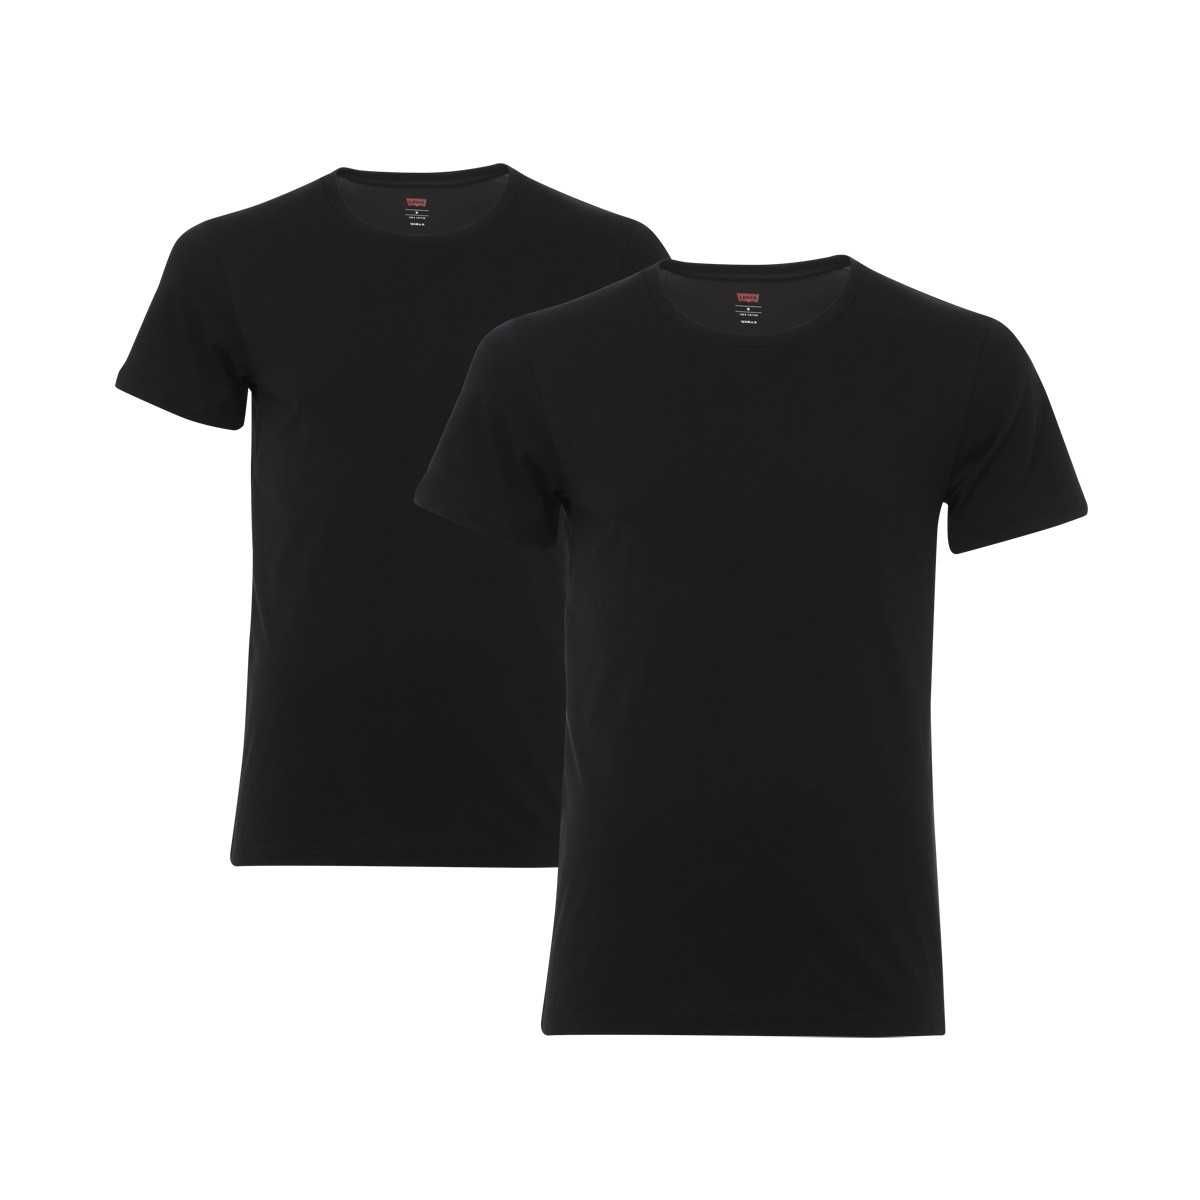 LEVIS Herren 2er Pack Basic Crew Shirts Unterhemden Rundausschnitt (JET BLACK, L)